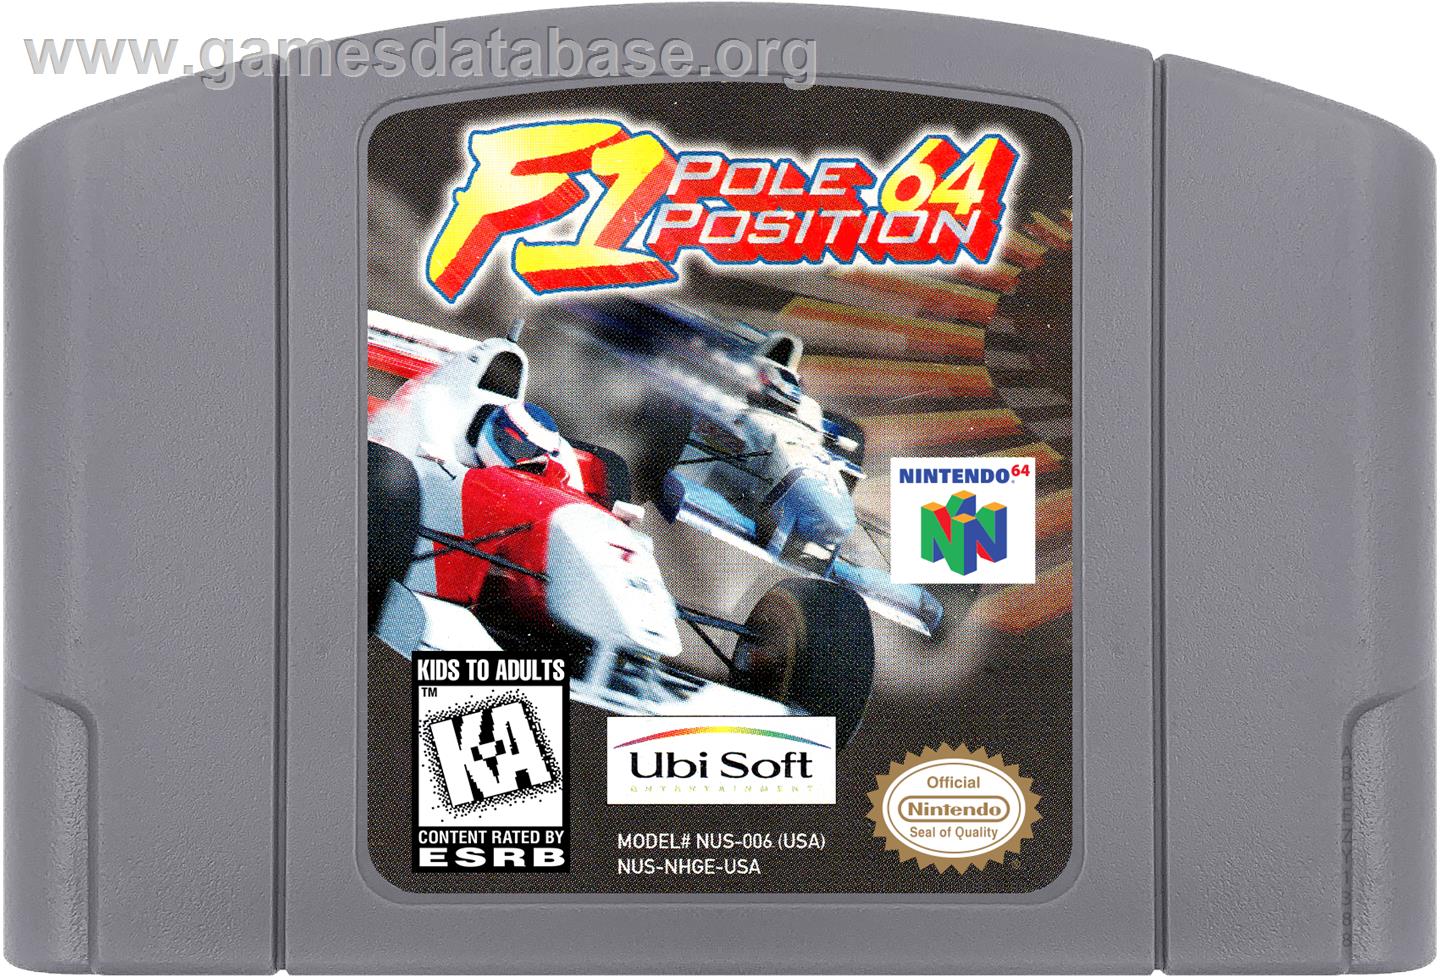 F1 Pole Position 64 - Nintendo N64 - Artwork - Cartridge